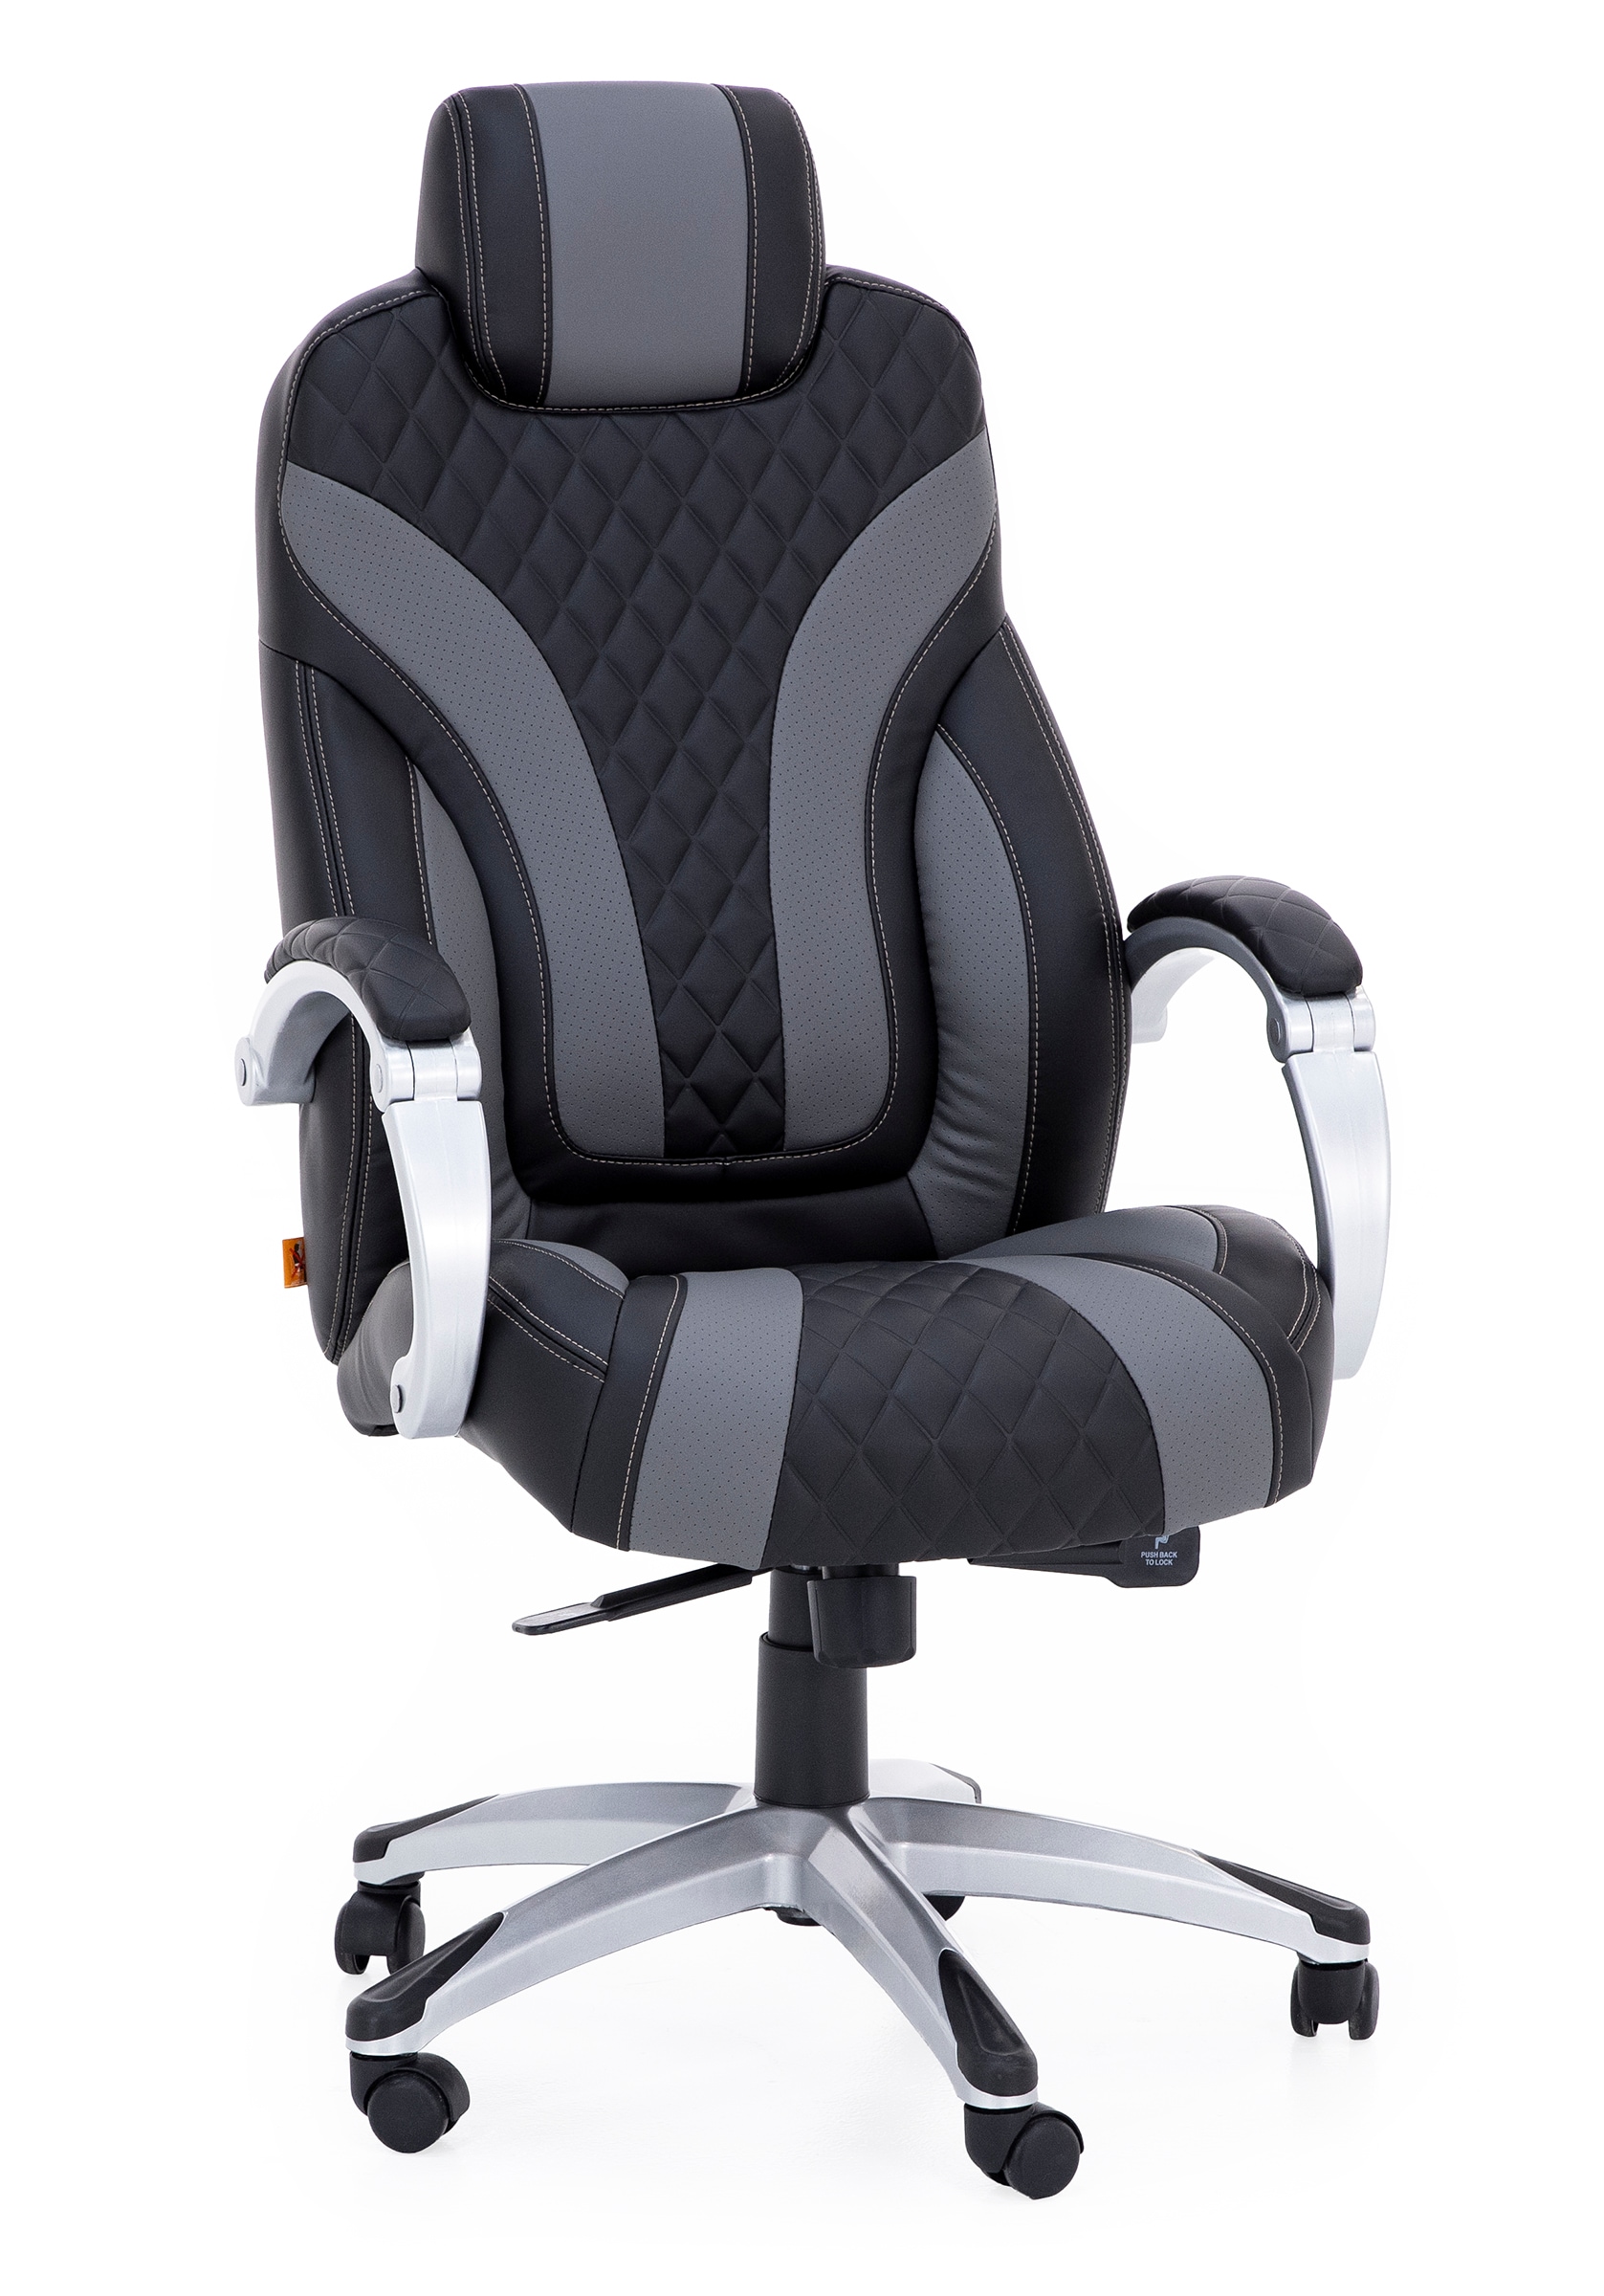 Executive/Gaming Chair